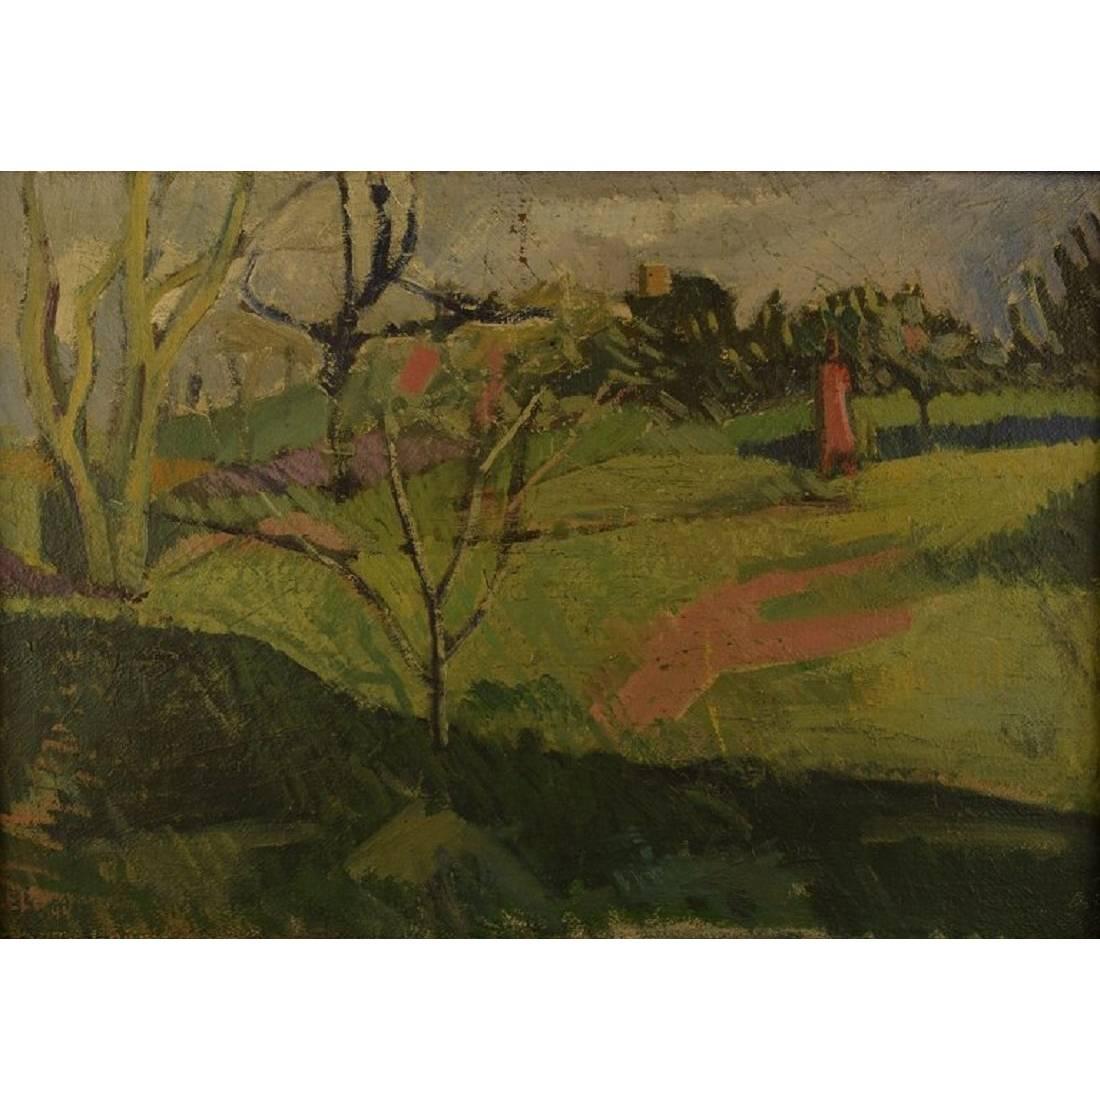 Unknown French Artist, Modernist Landscape, 1944, Oil on Canvas